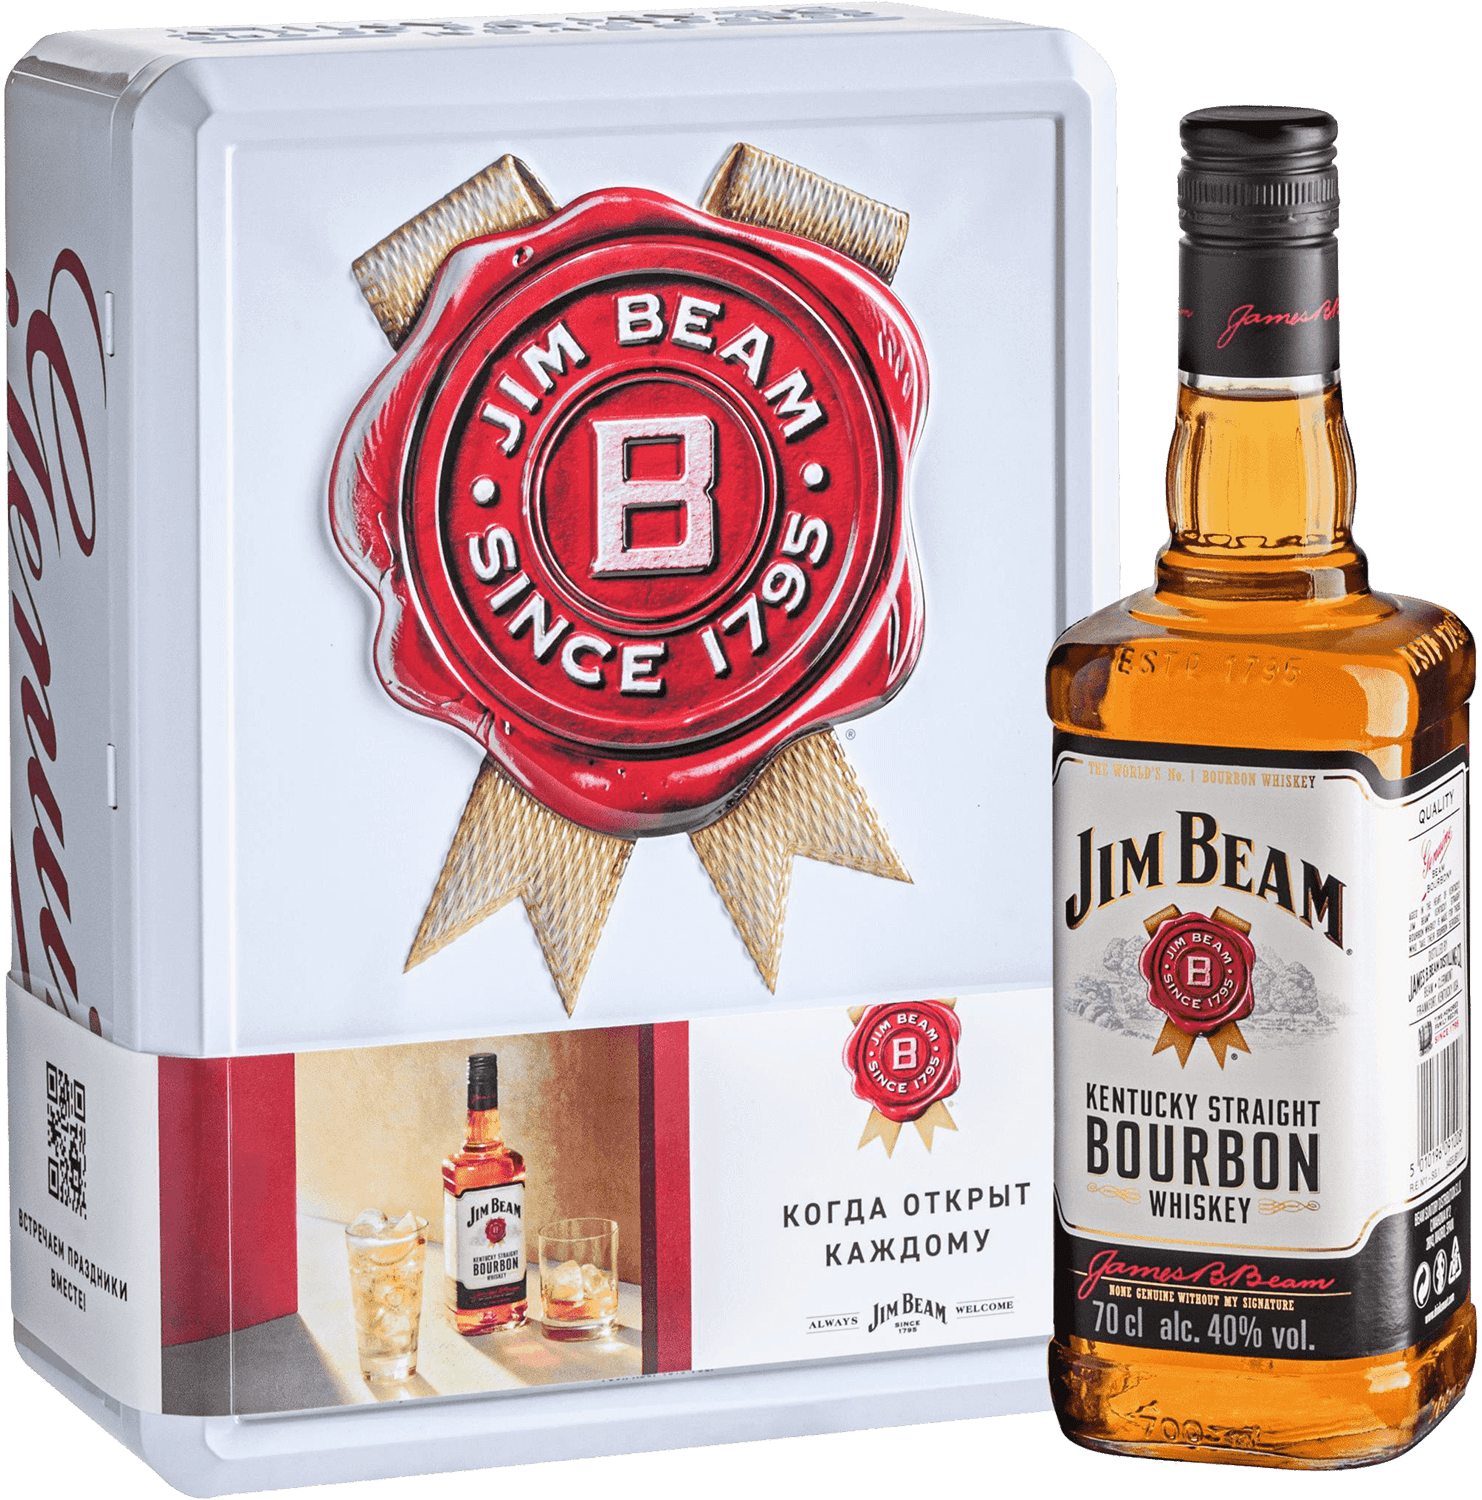 Jim Beam Kentucky Straight Bourbon Whiskey (gift box with 2 glasses) knob creek kentucky straight bourbon whiskey